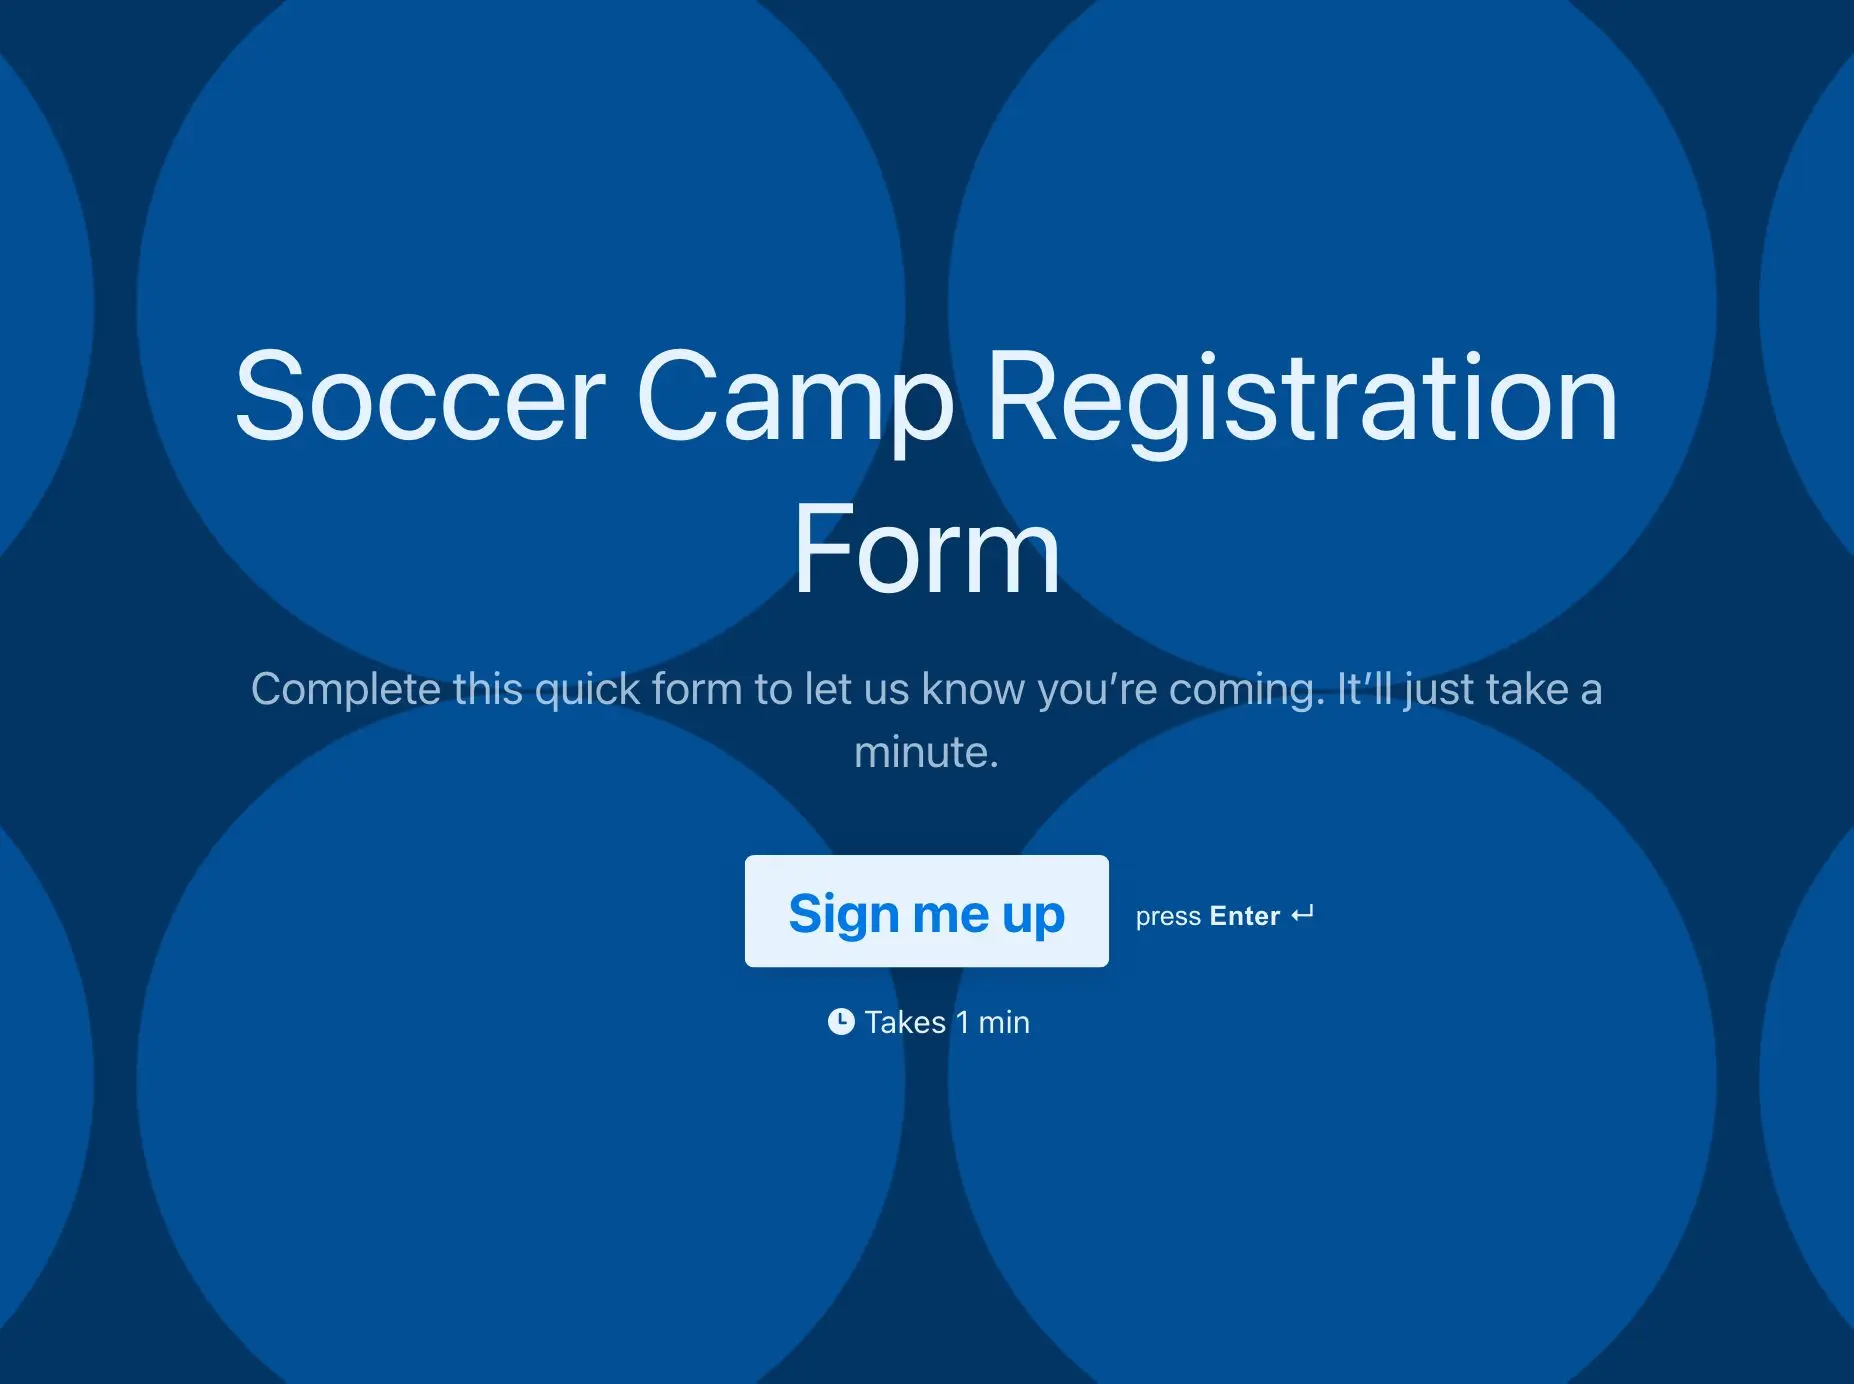 Soccer Camp Registration Form Template Hero